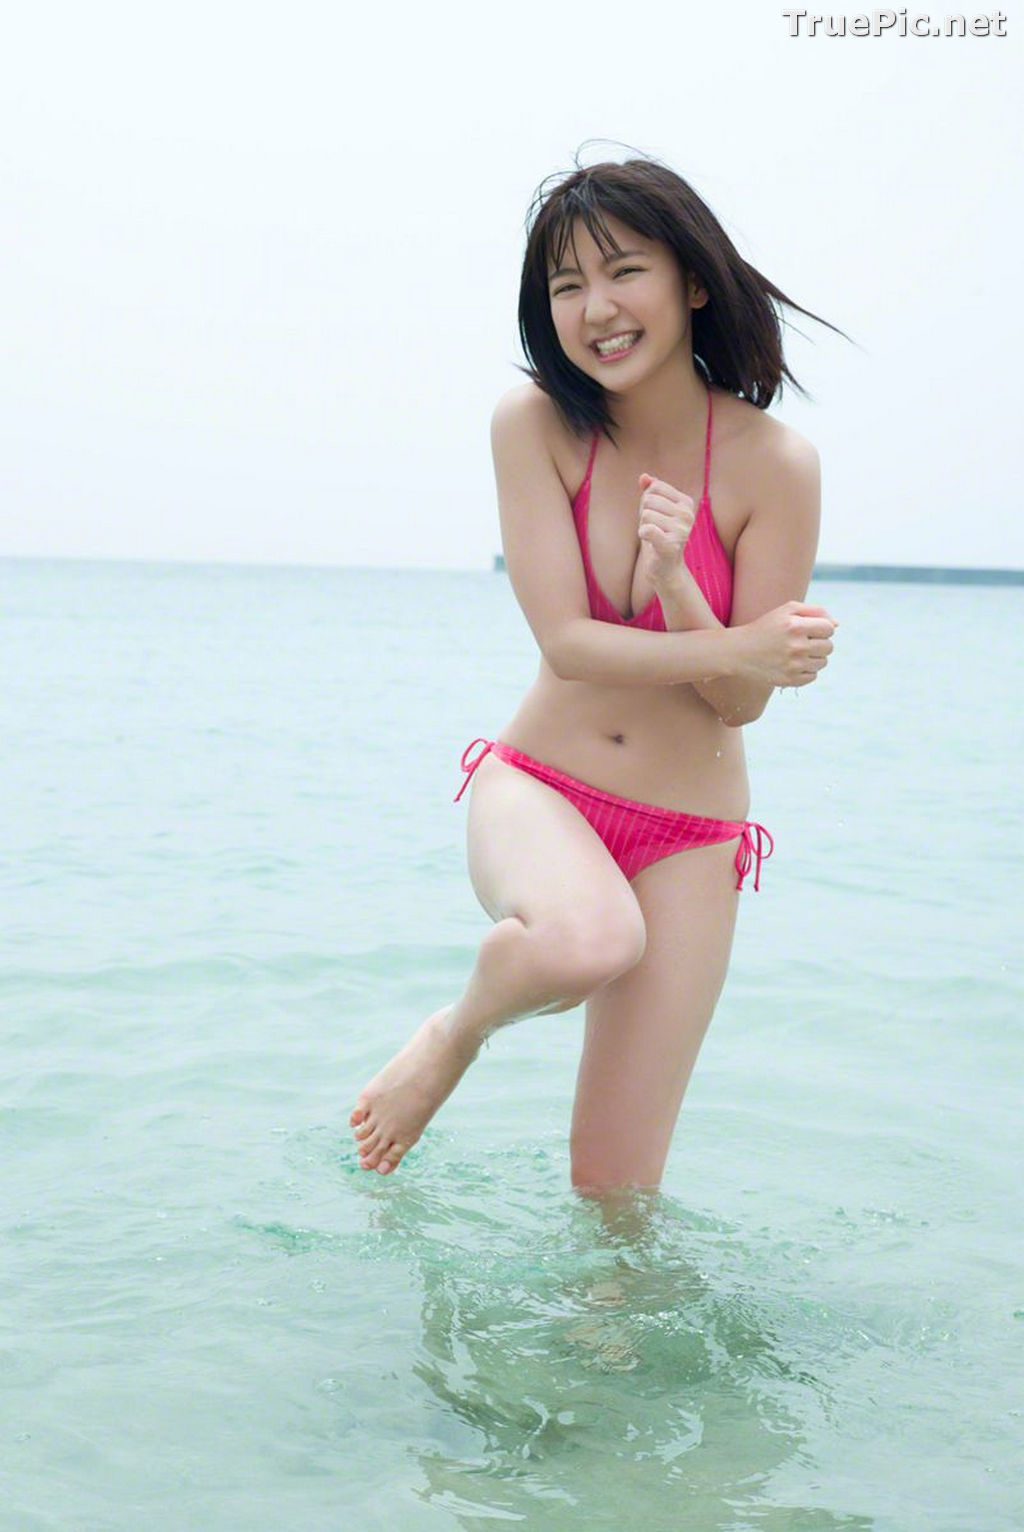 Image Wanibooks No.130 - Japanese Idol Singer and Actress - Erina Mano - TruePic.net - Picture-168